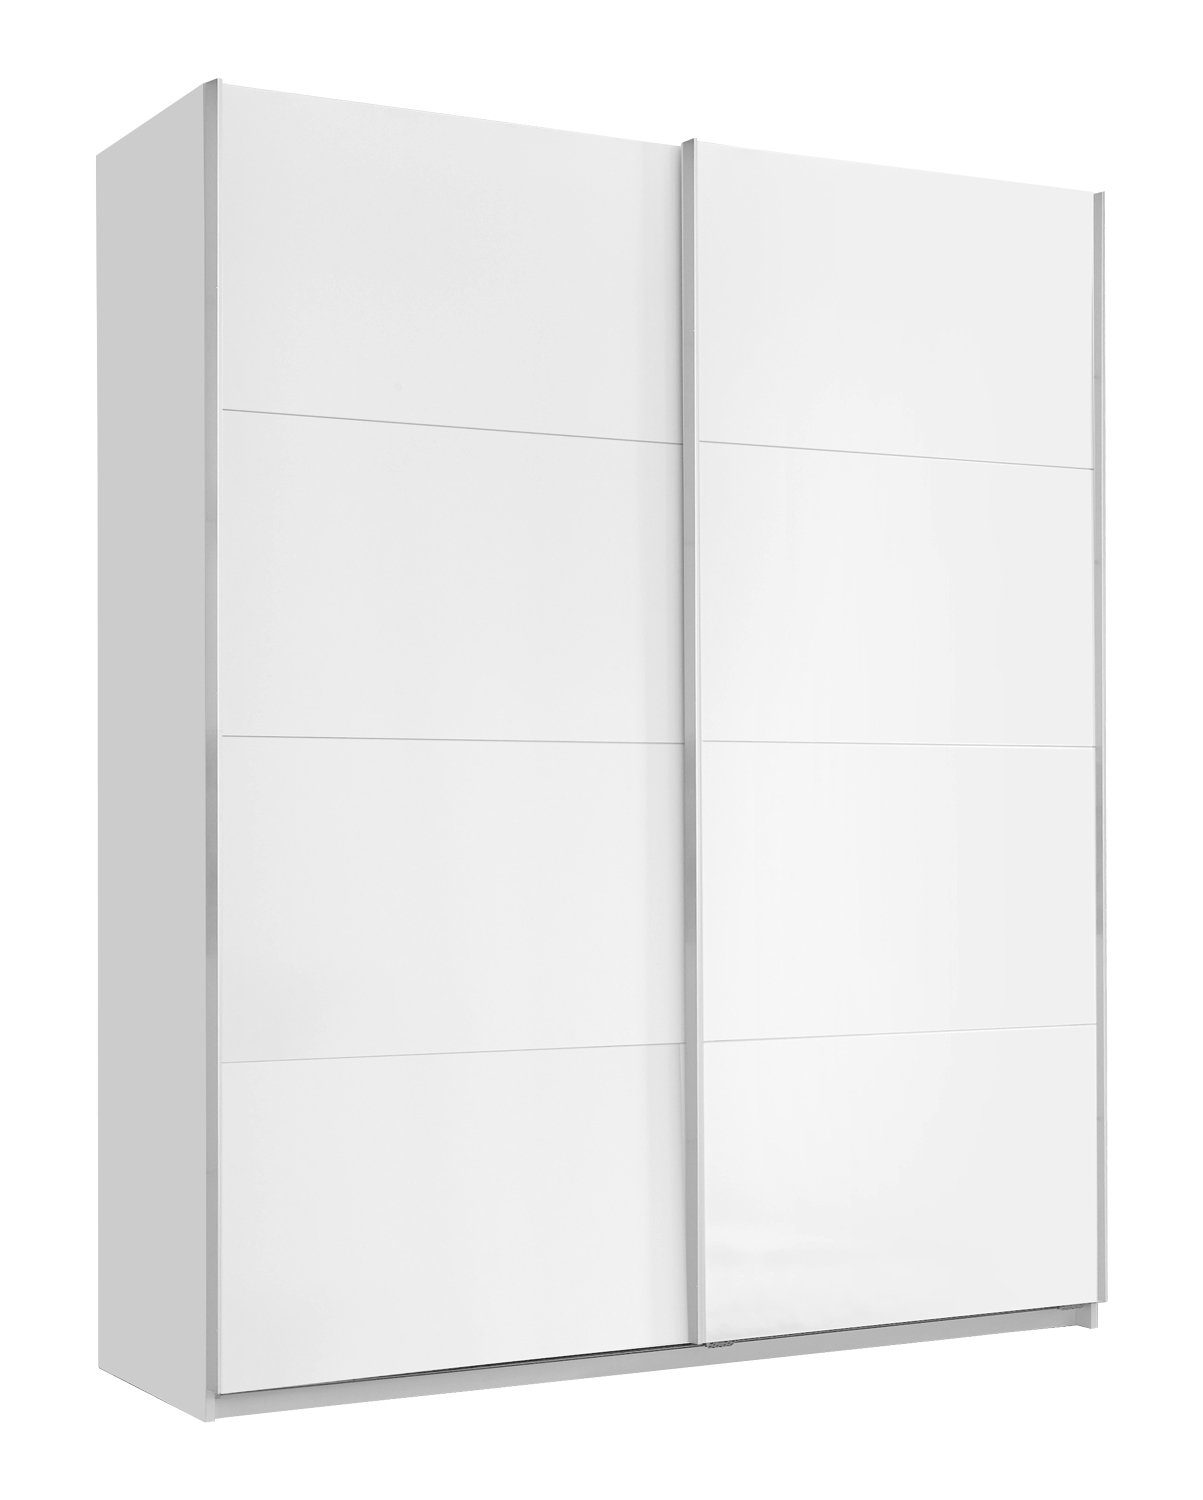 Pol-Power Schwebetürenschrank SEVILLA, Weiß Hochglanz, Weiß matt, B 170 cm x H 210 cm, 2 Türen